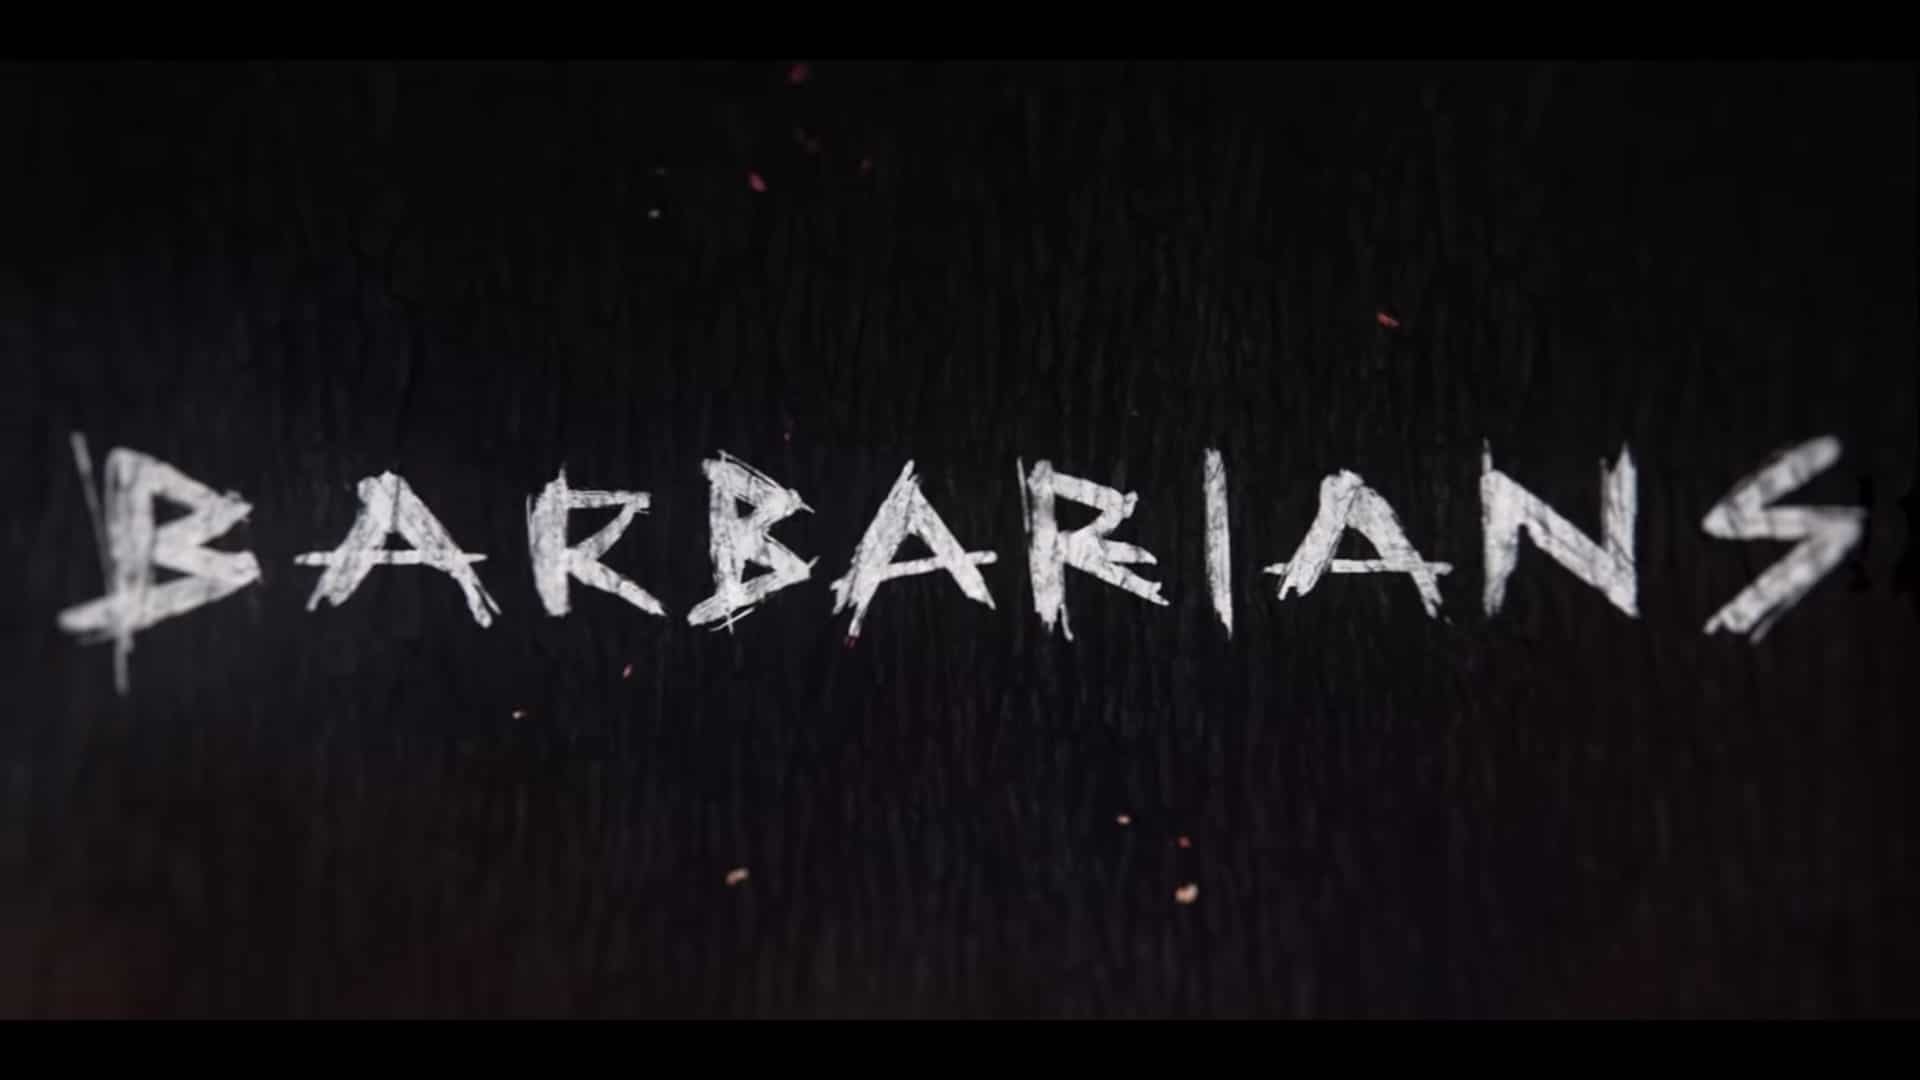 Netflix Barbarians Trailer, Netflix Drama Series, Netflix Action Series, Coming to Netflix in October 2020